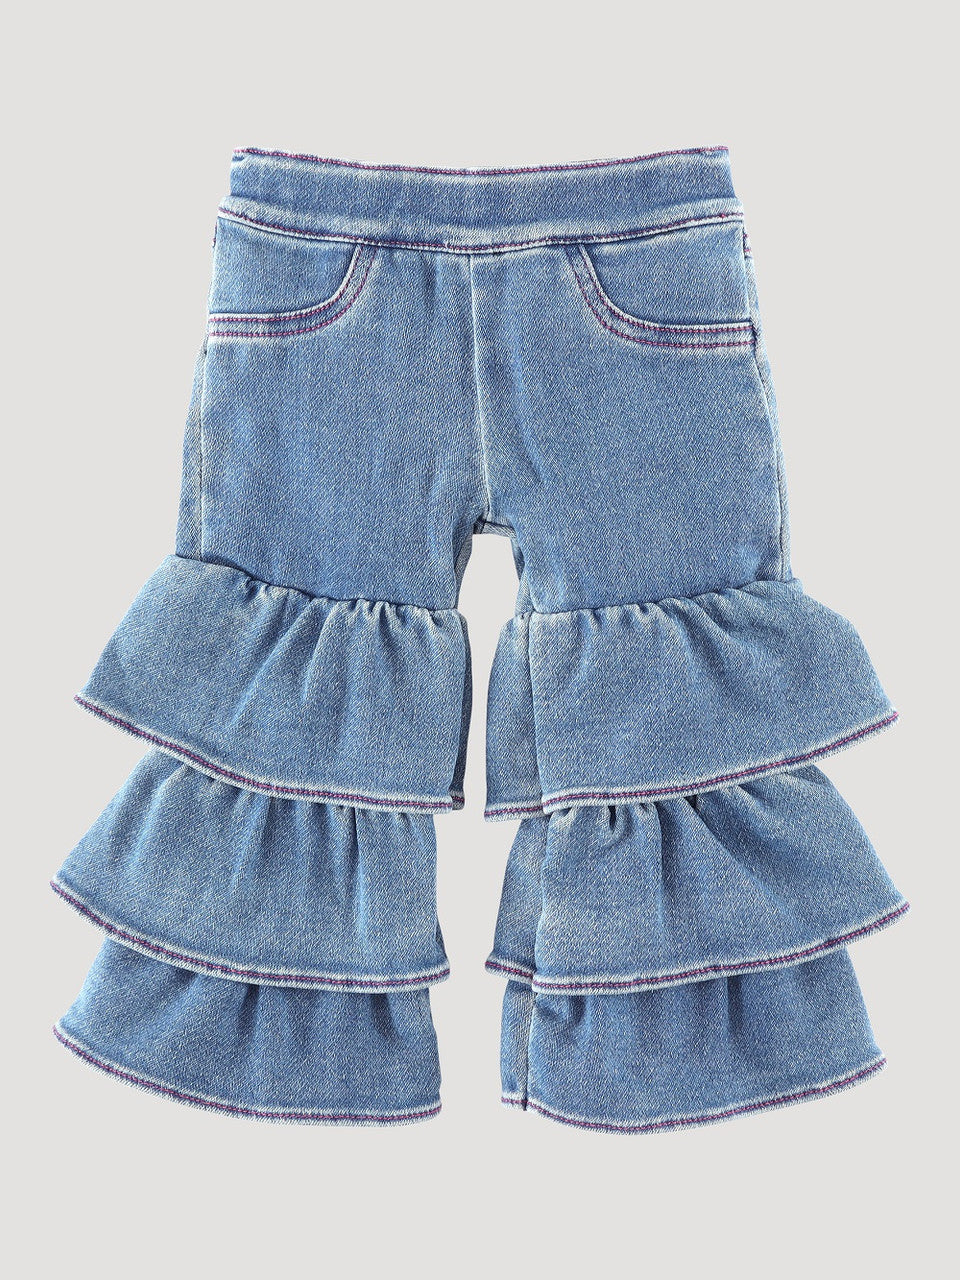 Wrangler Baby/Toddler Girl Tiered Flare Jeans